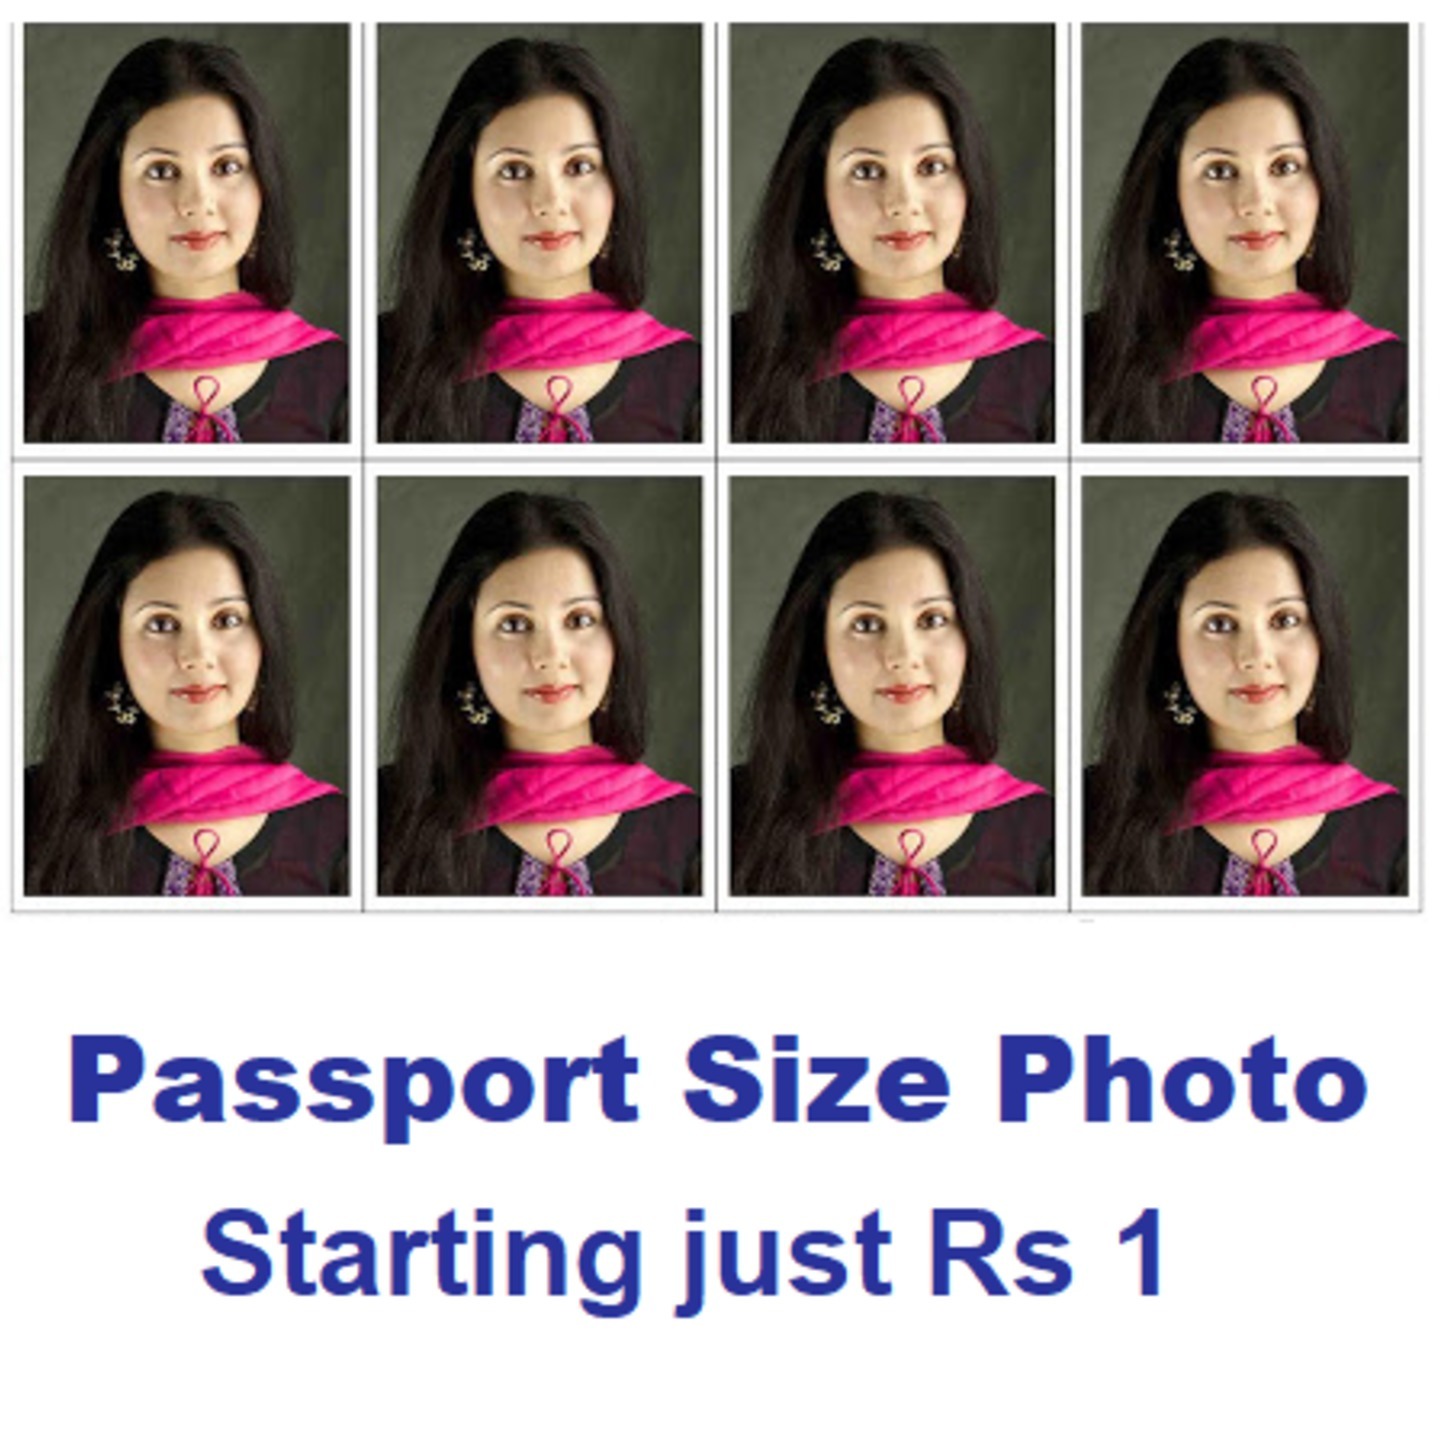 Passport size photo starting just Rs 1